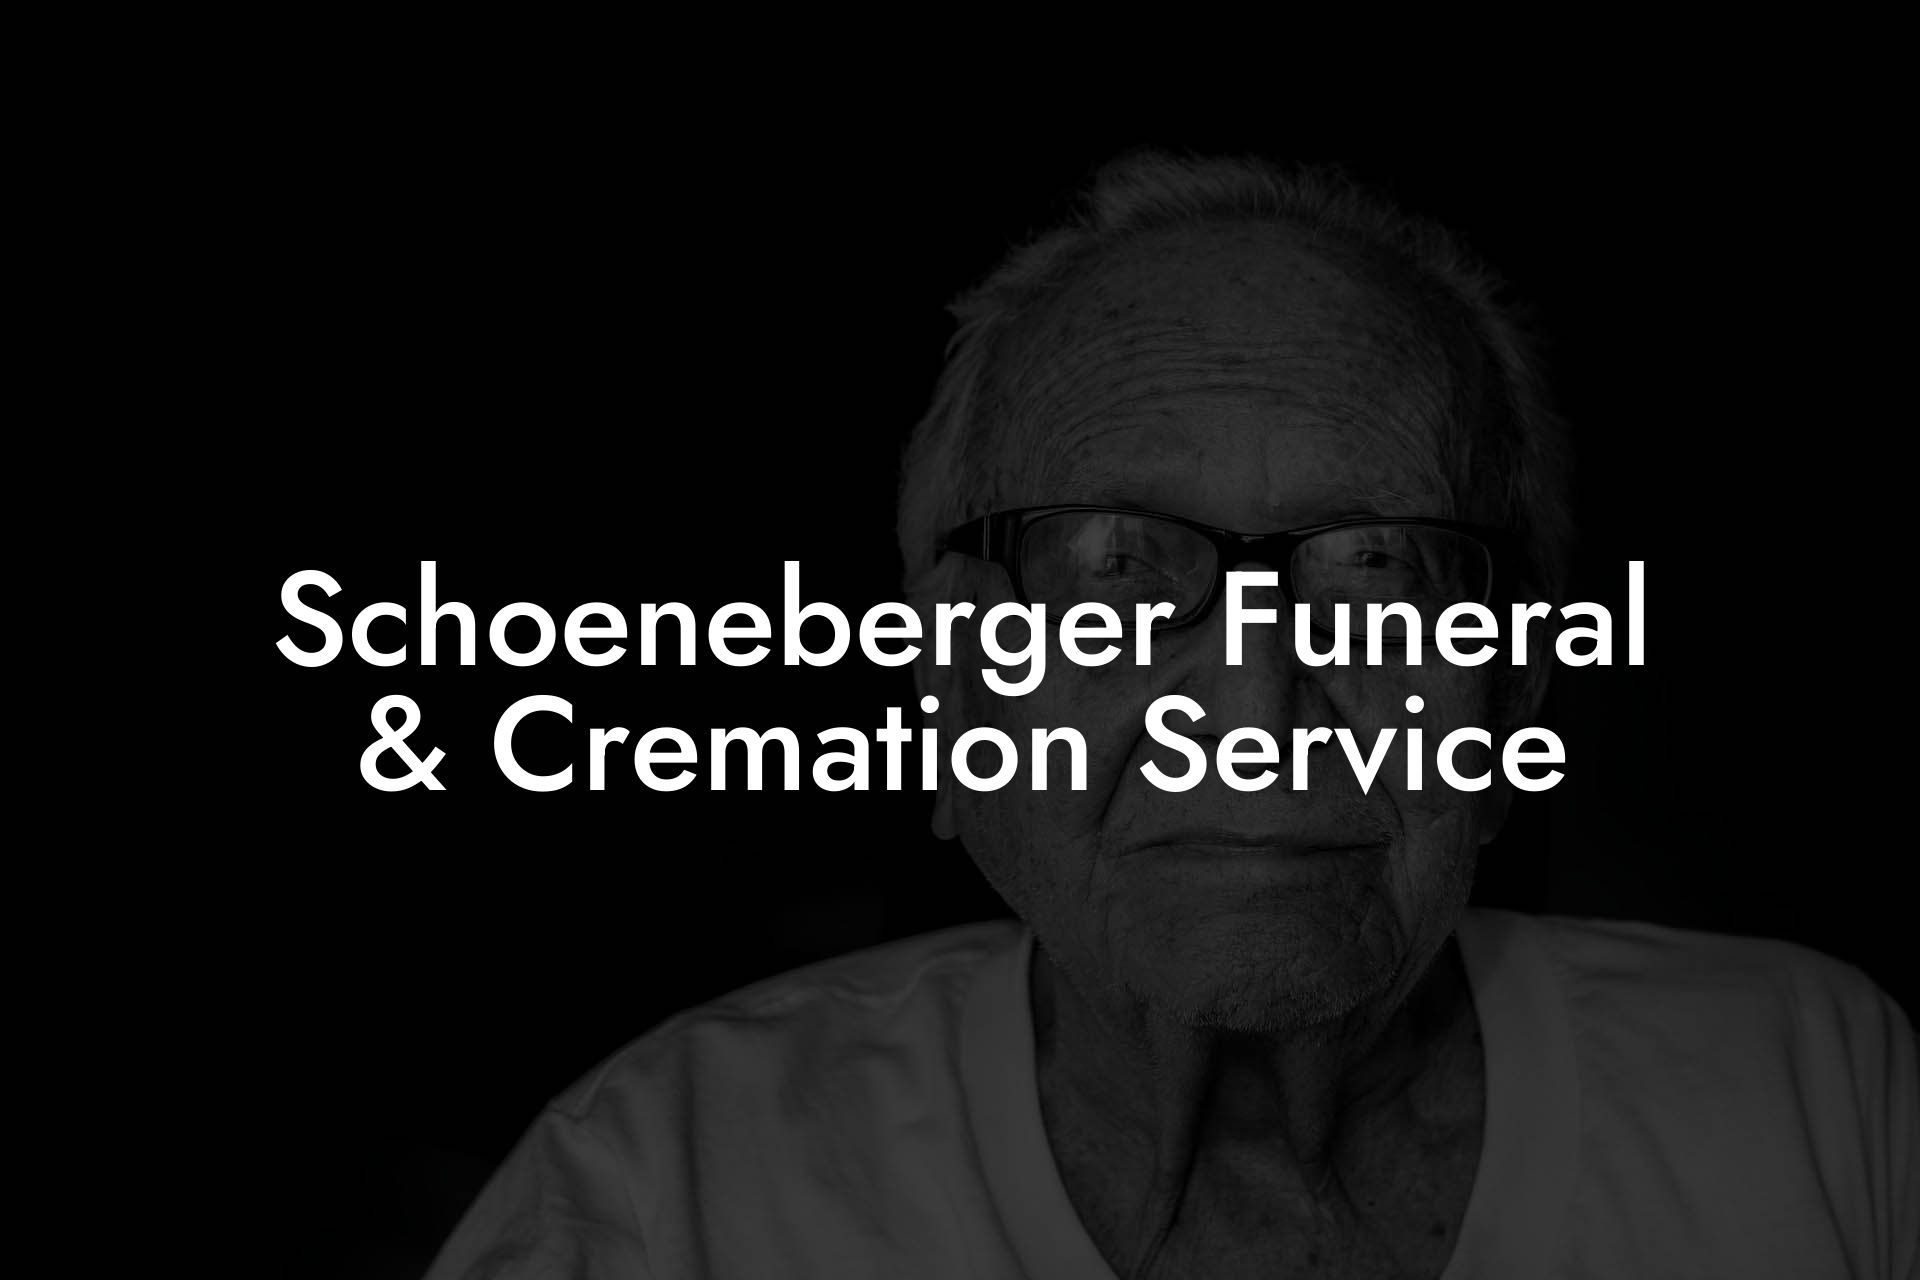 Schoeneberger Funeral & Cremation Service